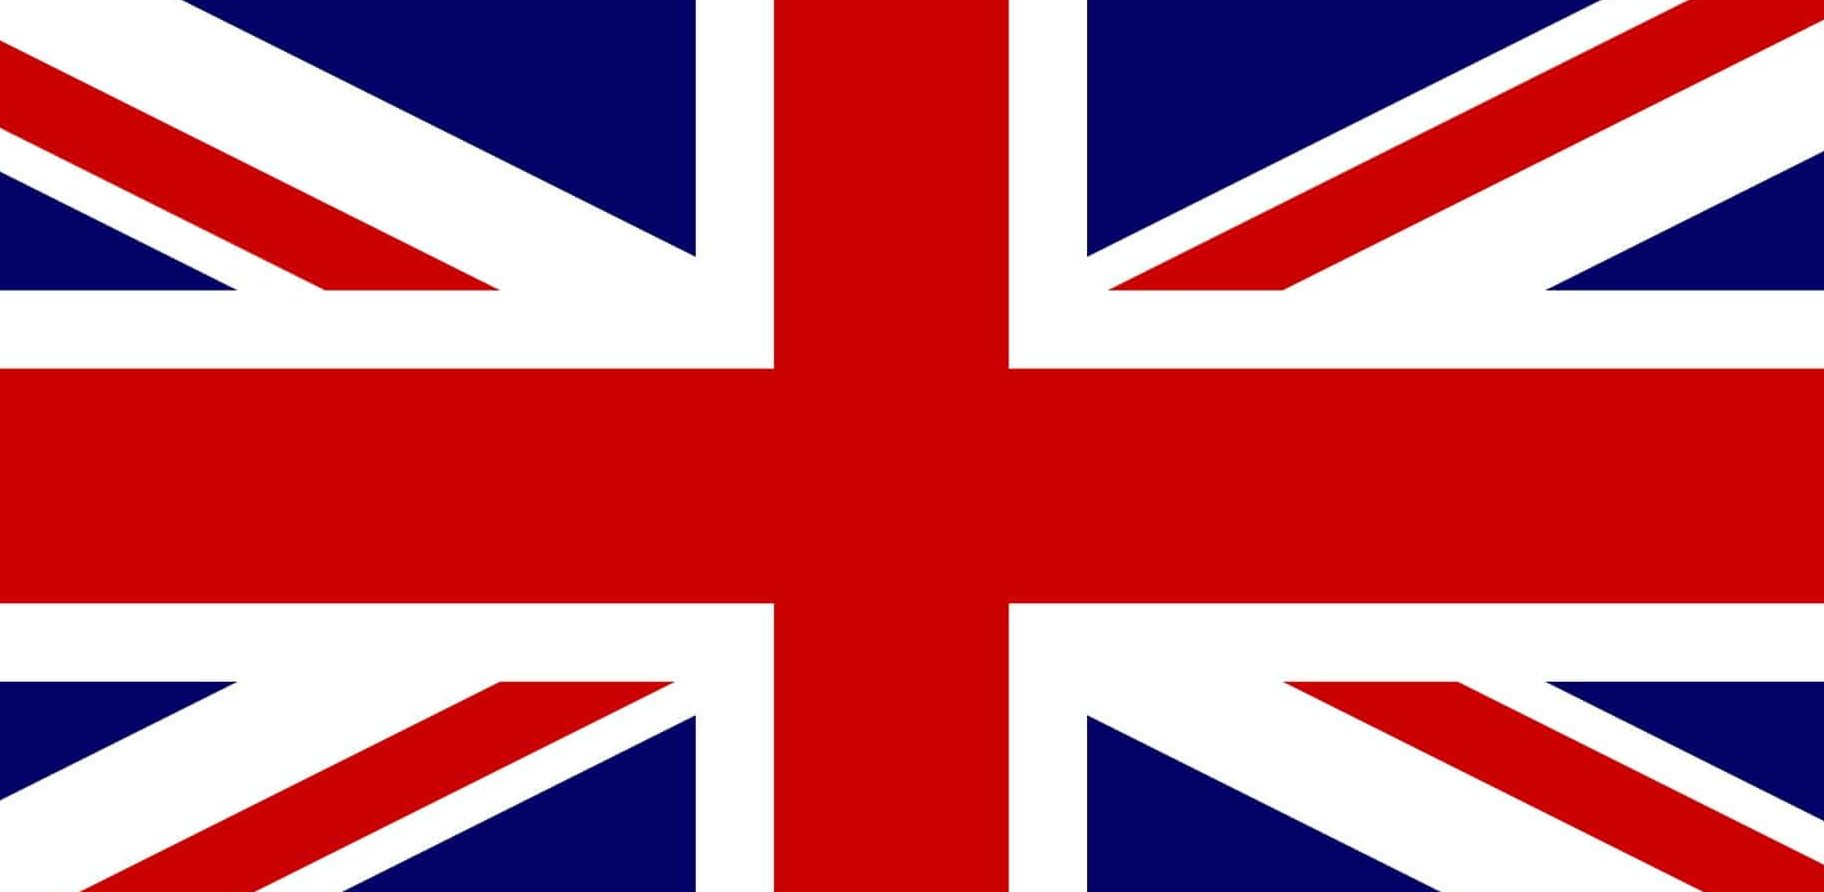 Bandera británica - union jack